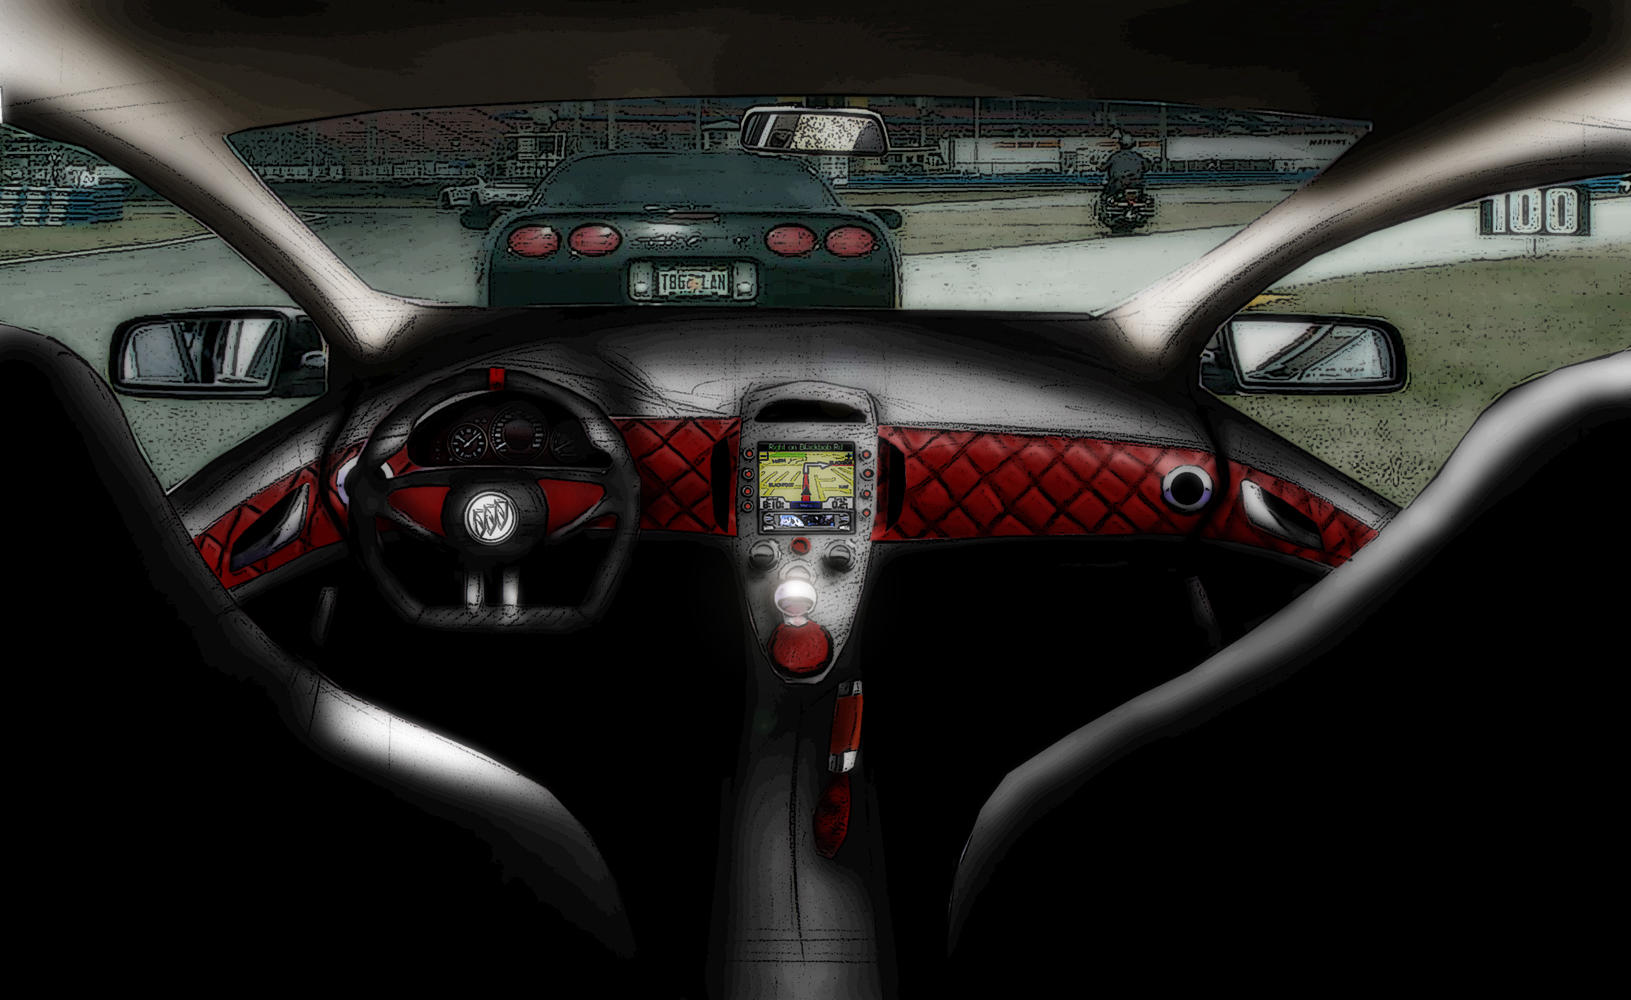 Buick GSX interior by AutoEurotica on deviantART